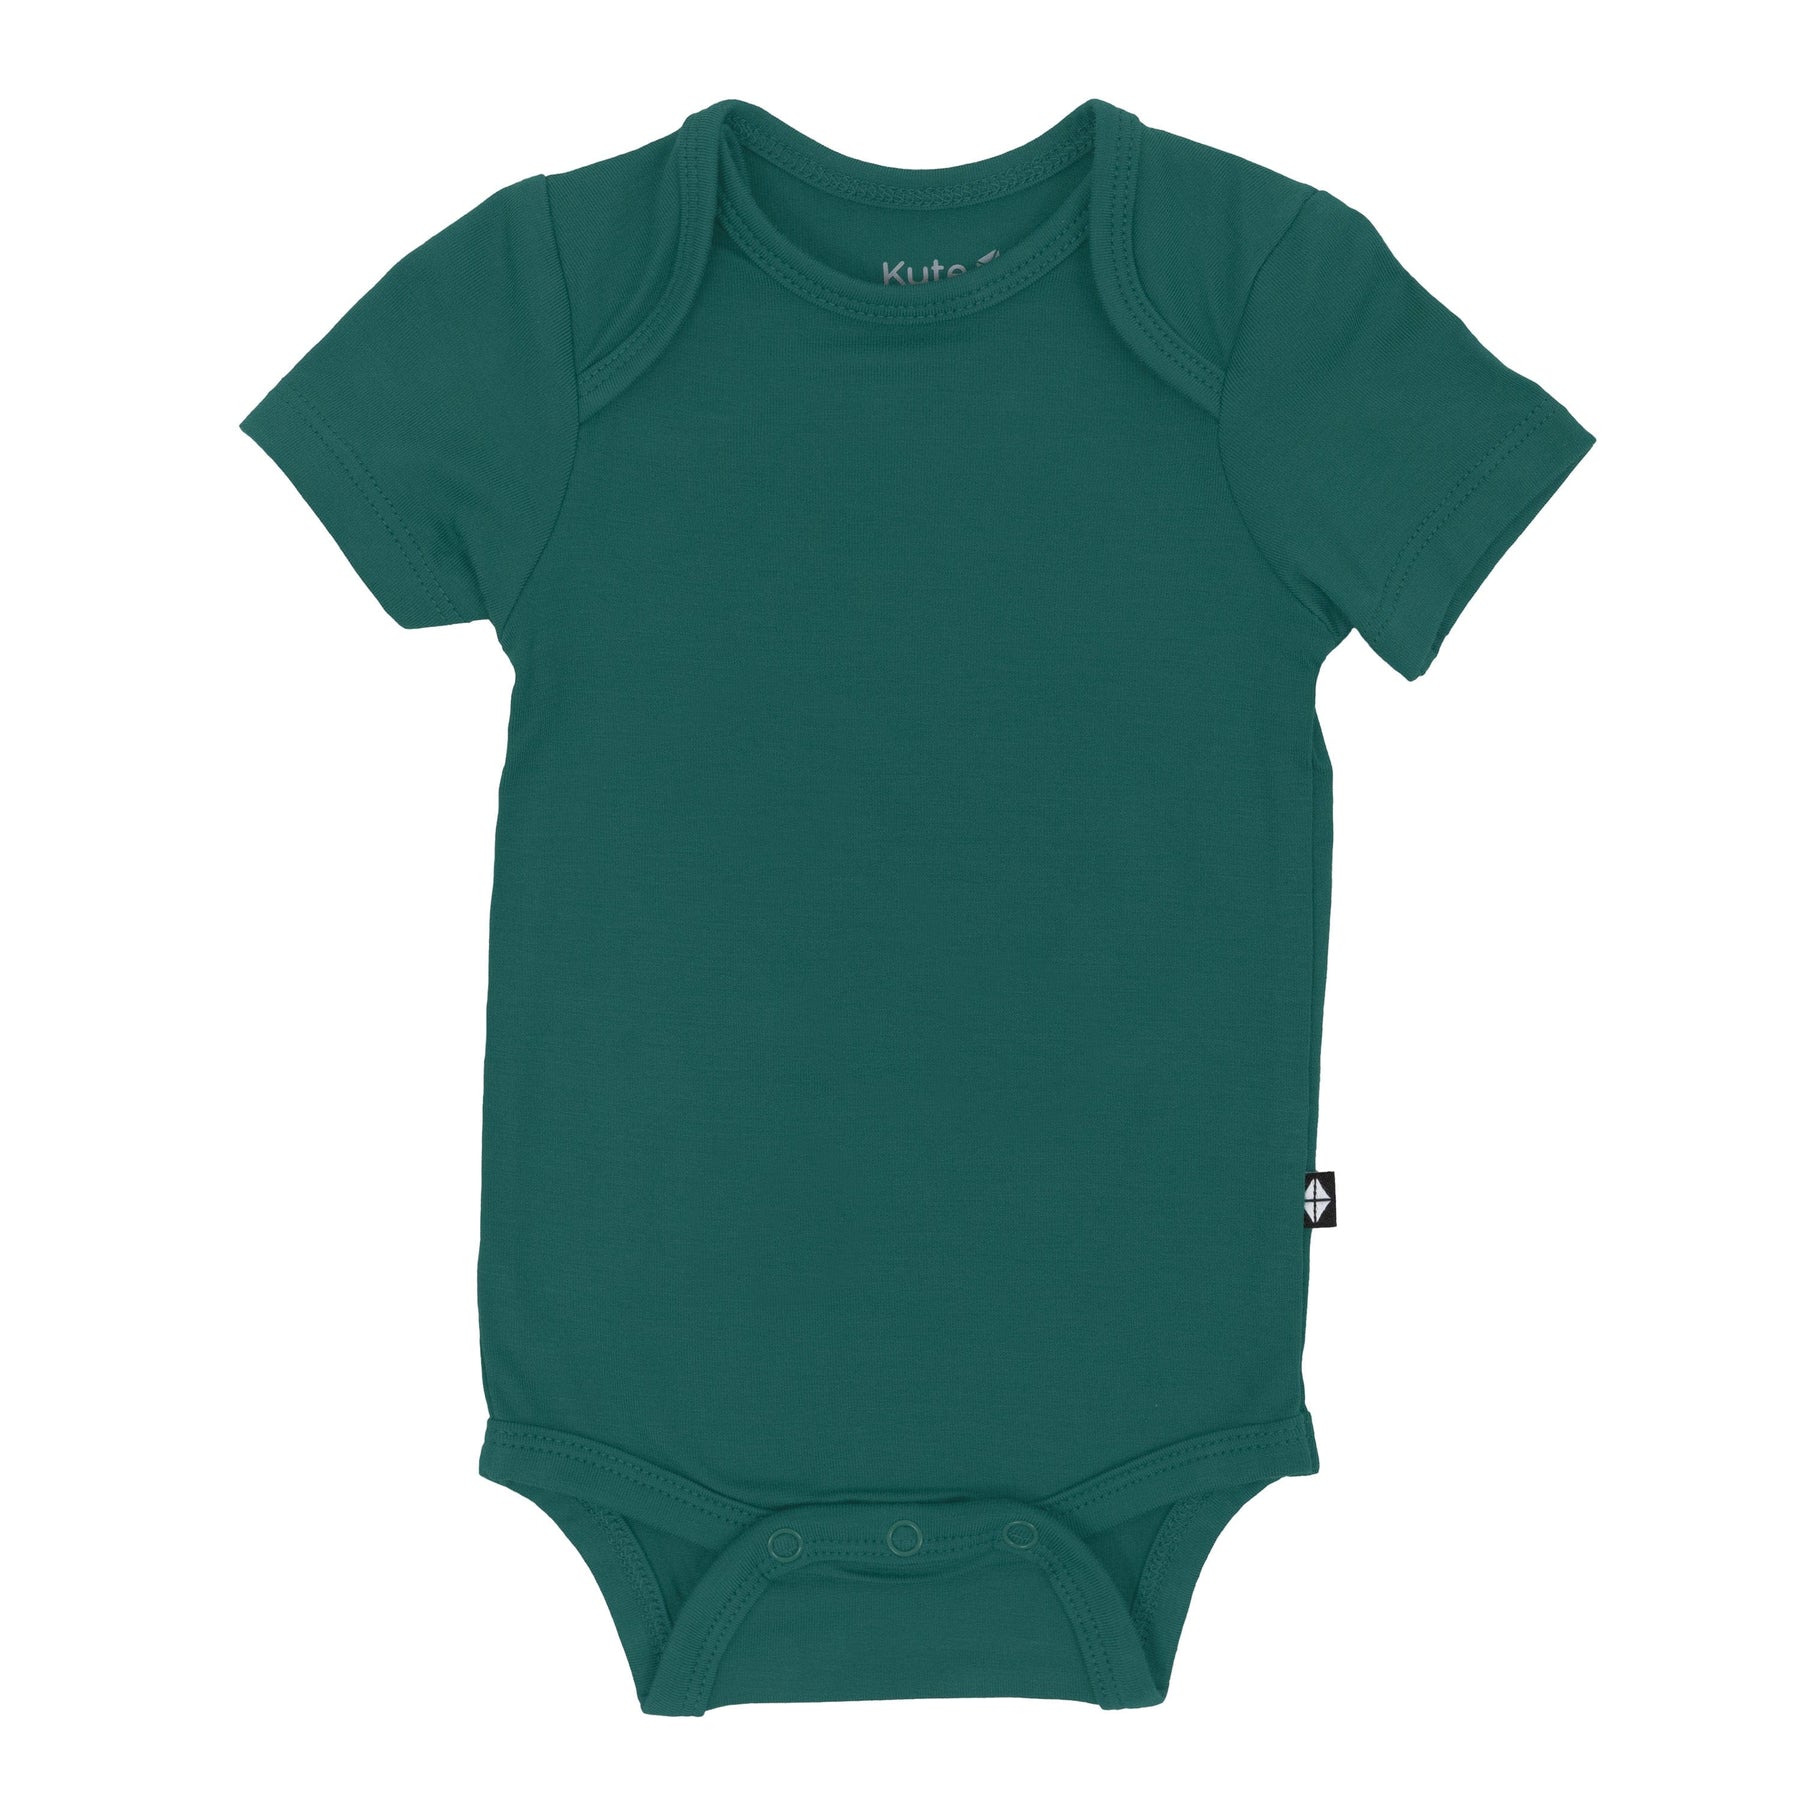 Kyte Baby Short Sleeve Bodysuits Bodysuit in Emerald